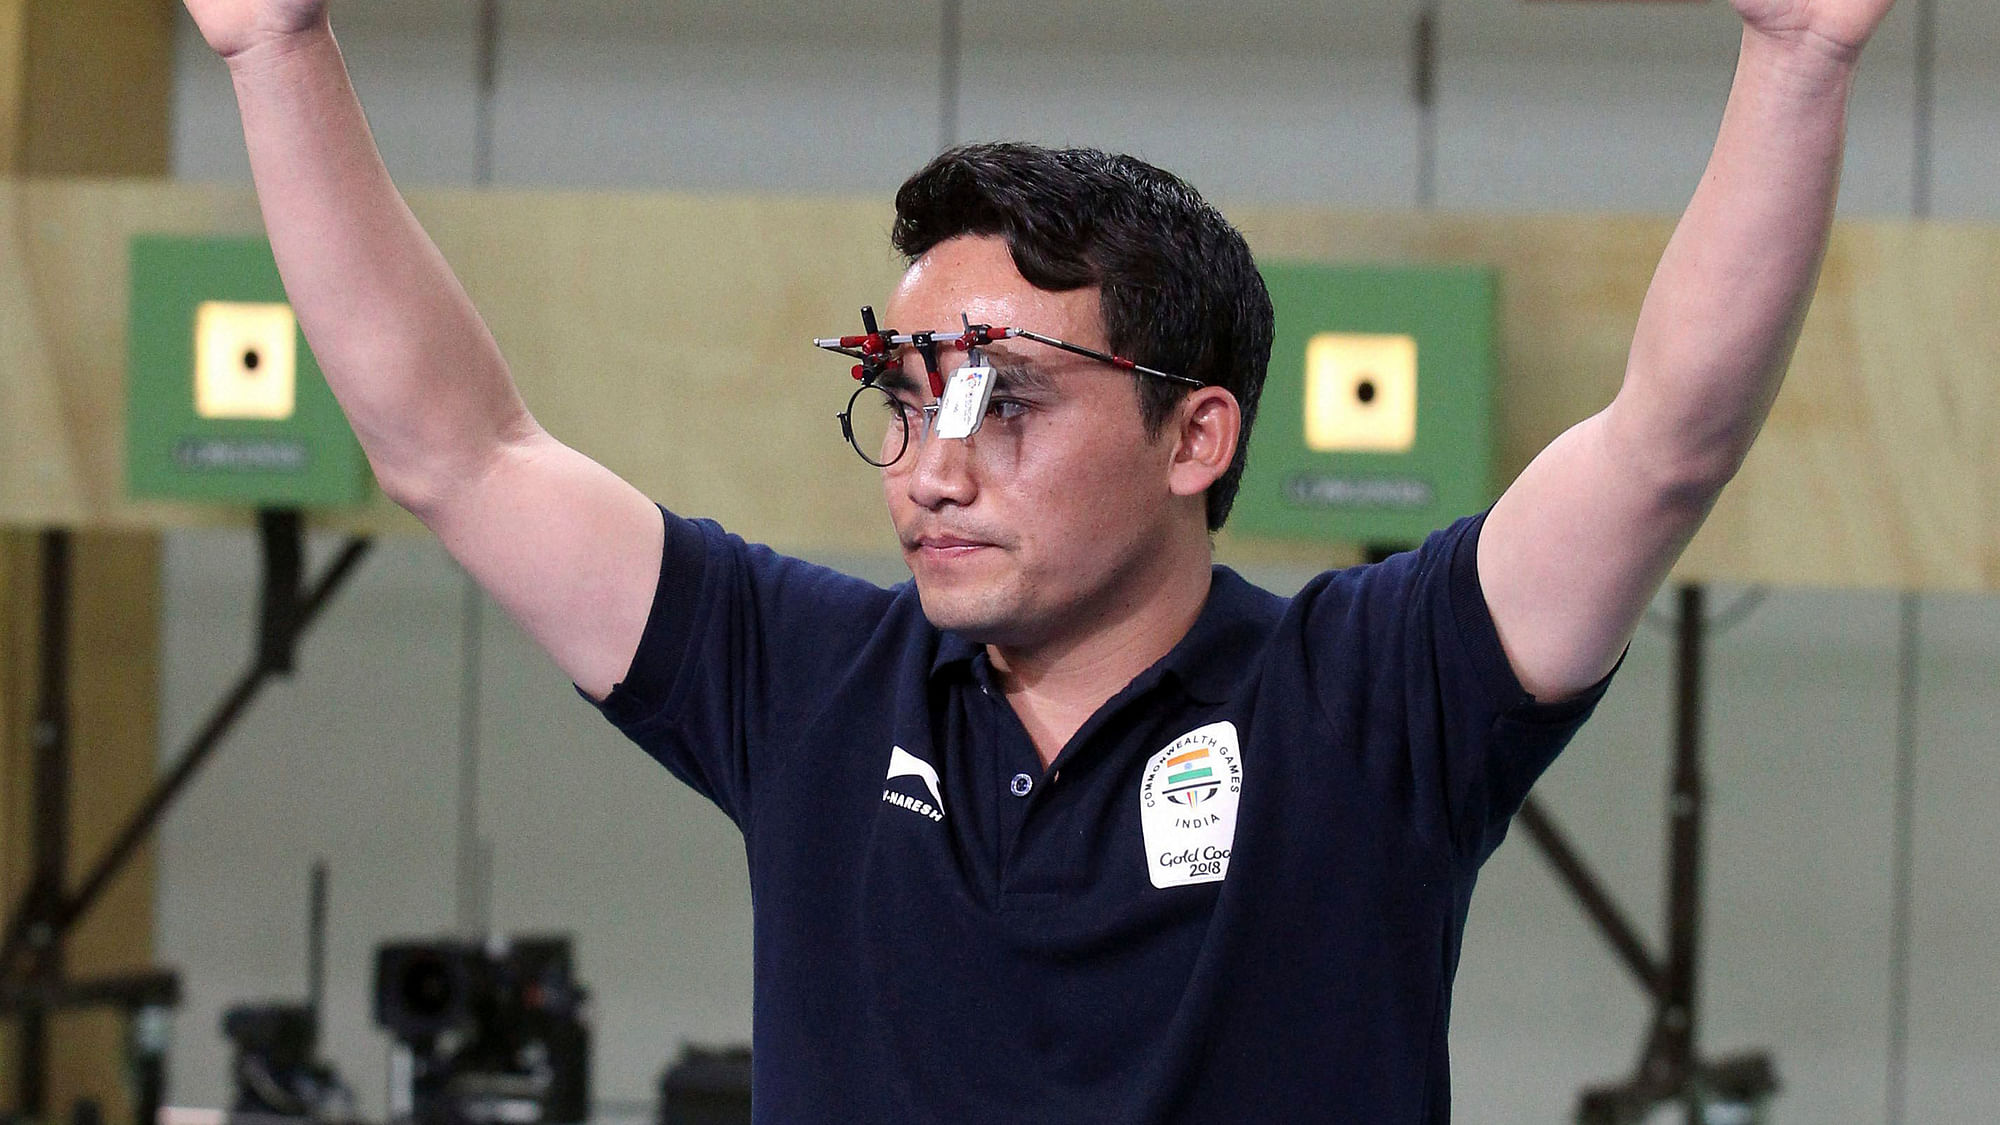 Jitu Rai had won India’s first shooting gold medal of the 2014 Incheon Asian Games.